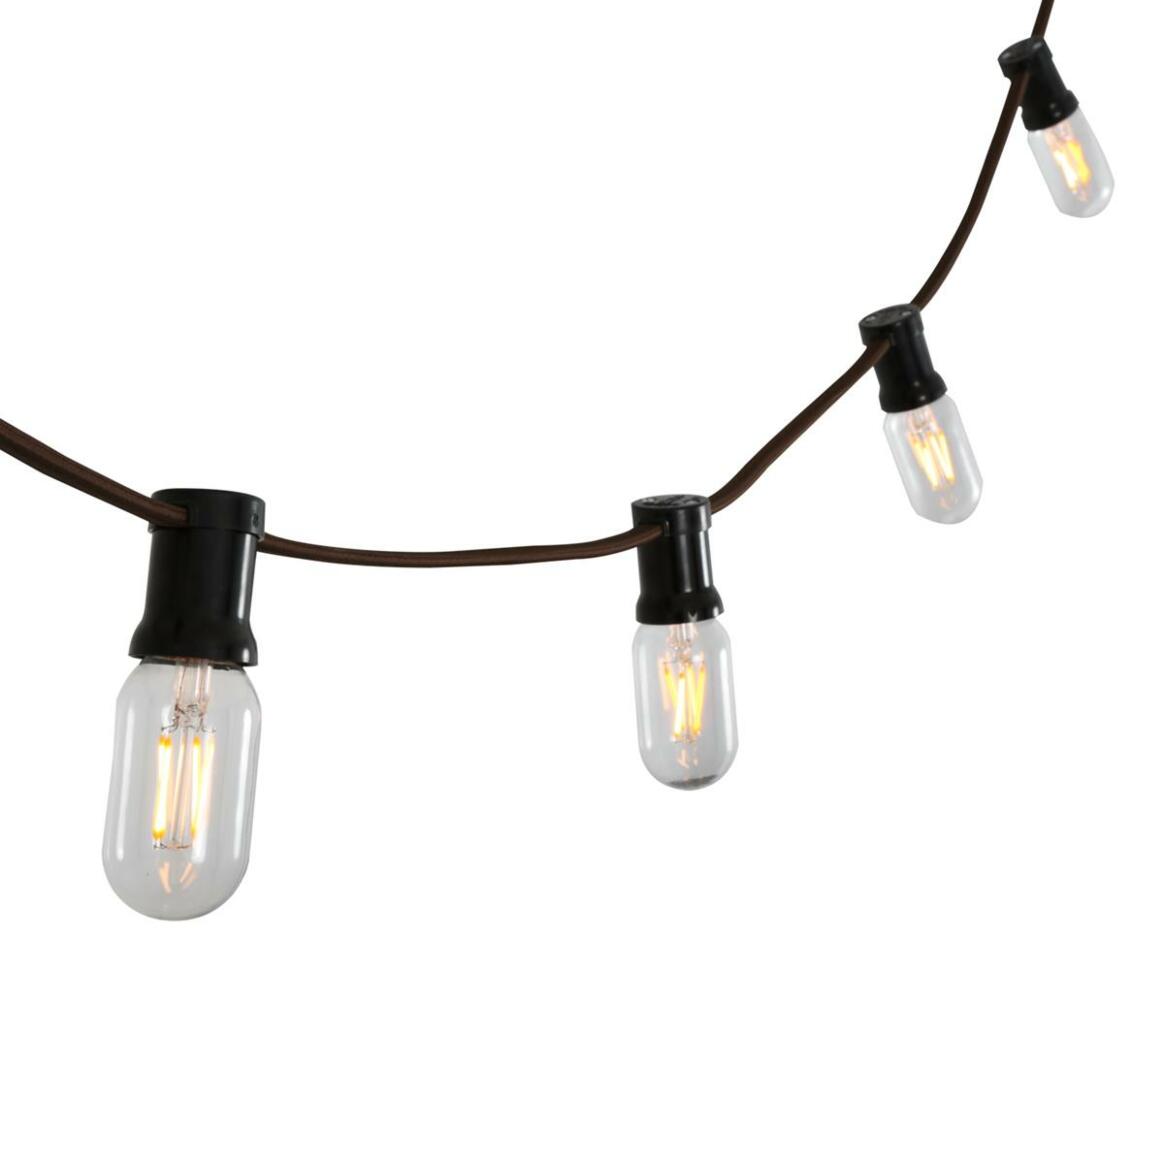 Lamp Holder for Festoon or String Lights main product image